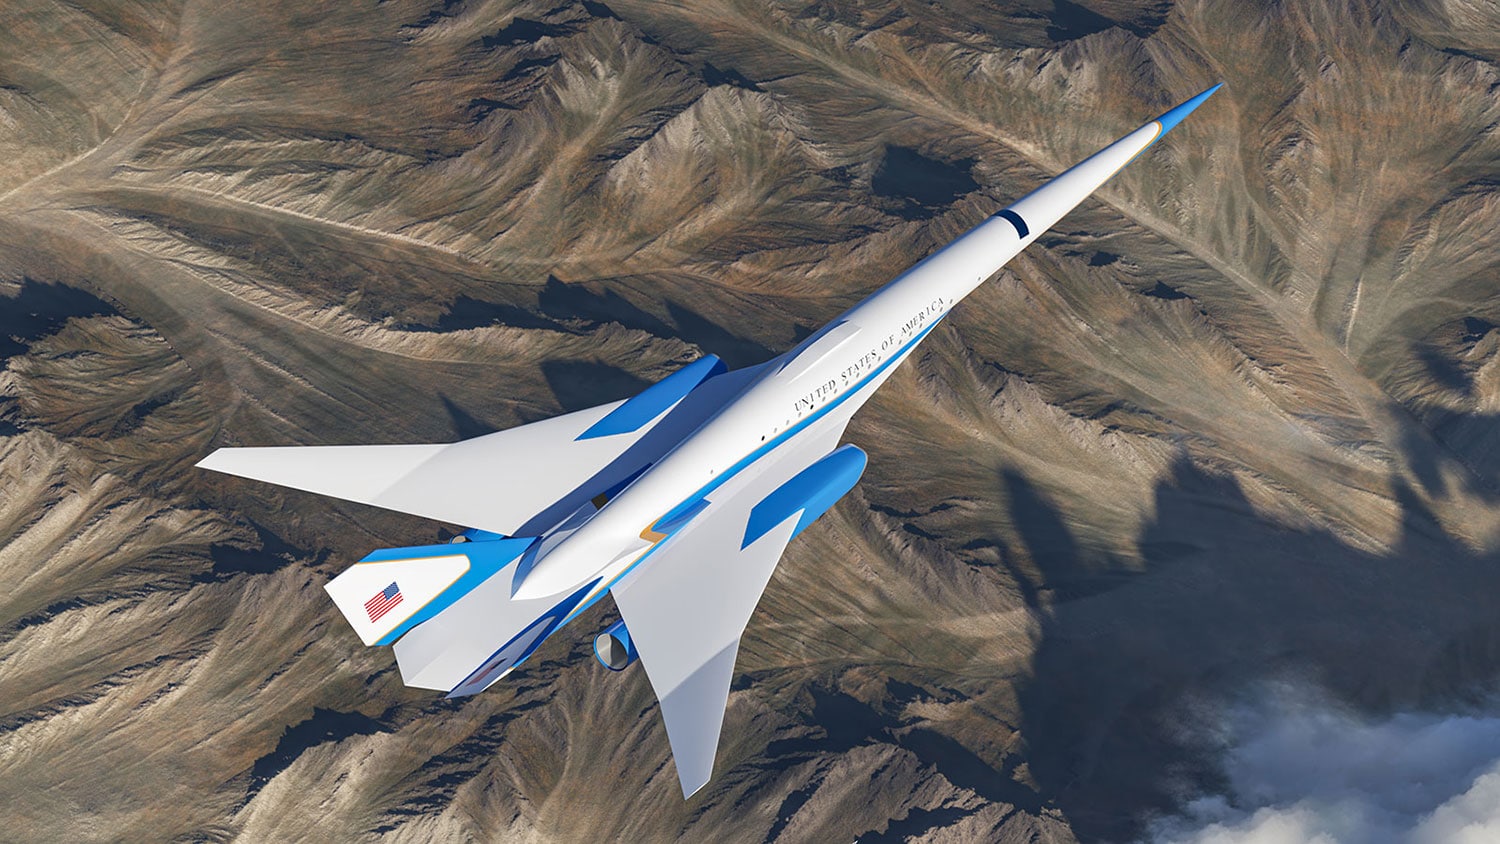 Exosonic supersonic plane